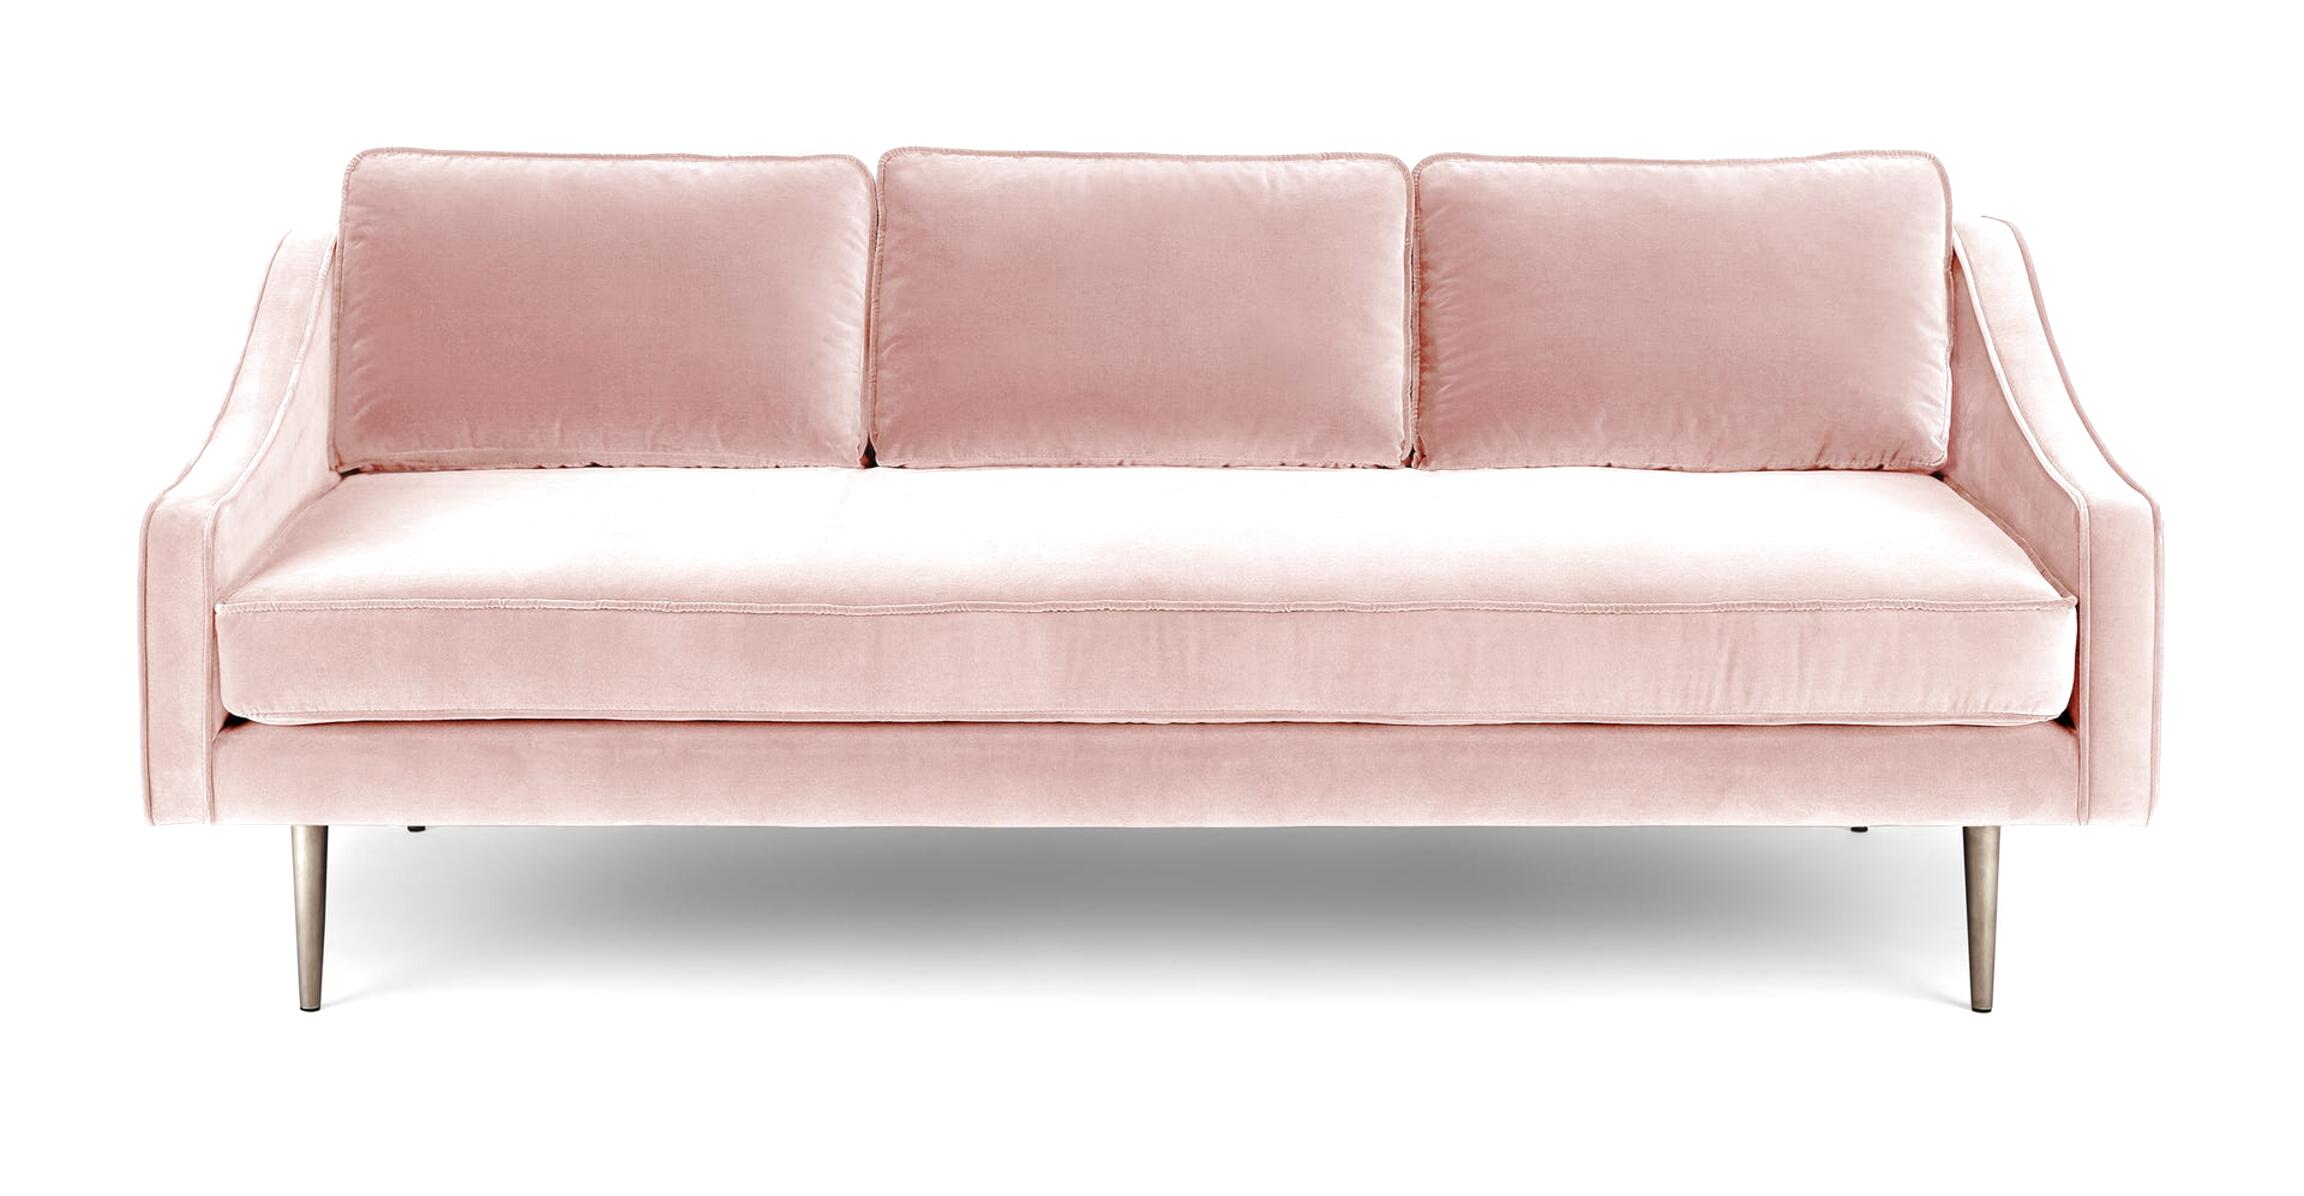 the pink stuff leather sofa